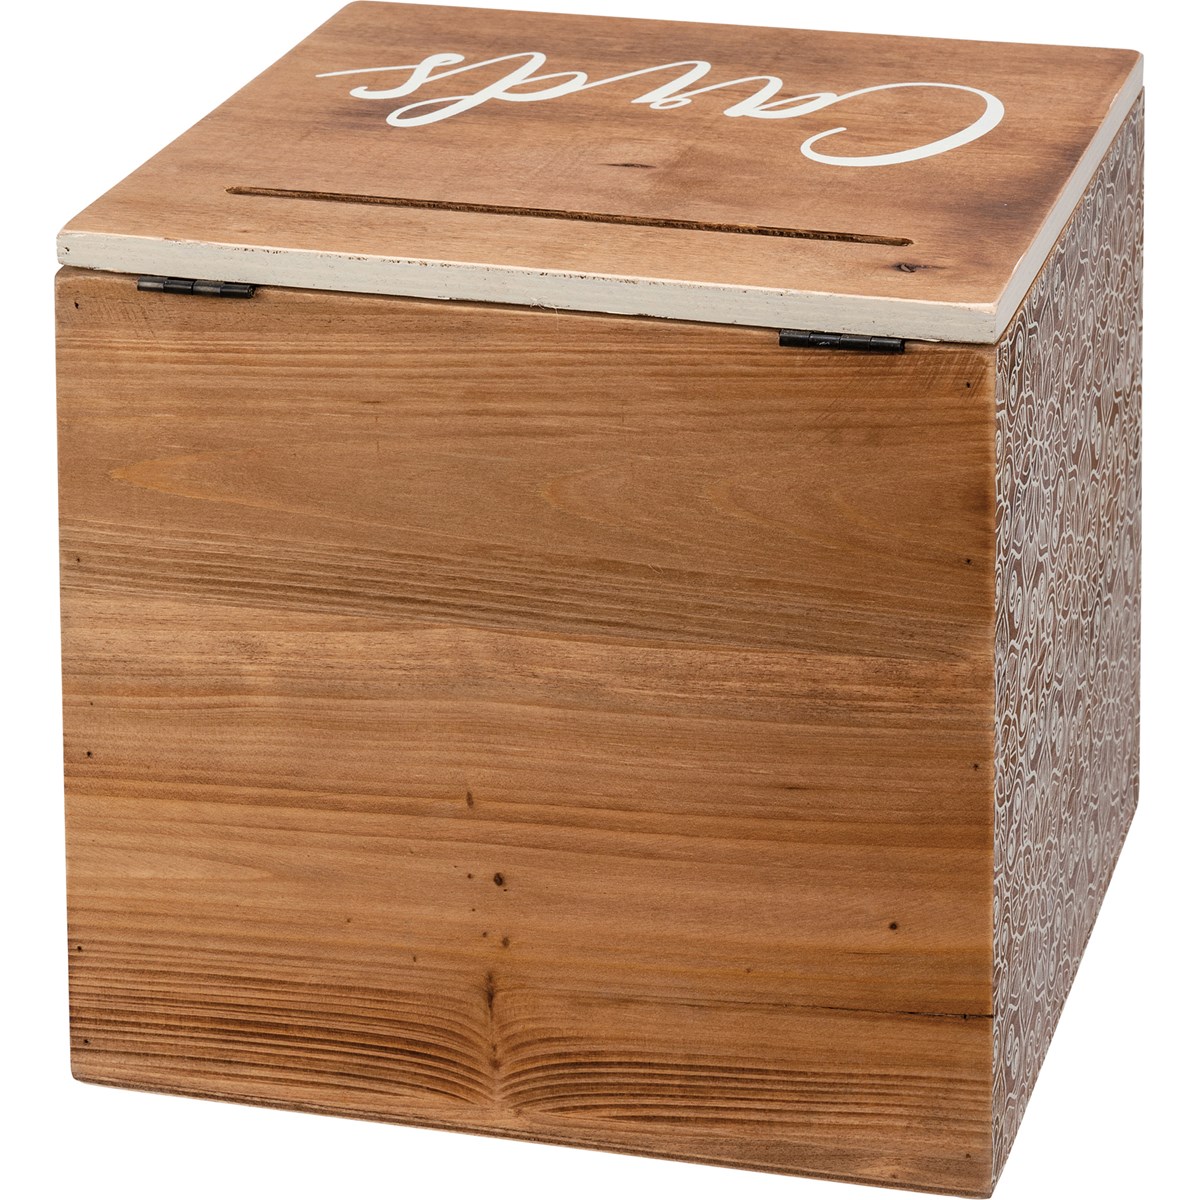 Wedding Card Box - Wood, Faux Rattan, Metal